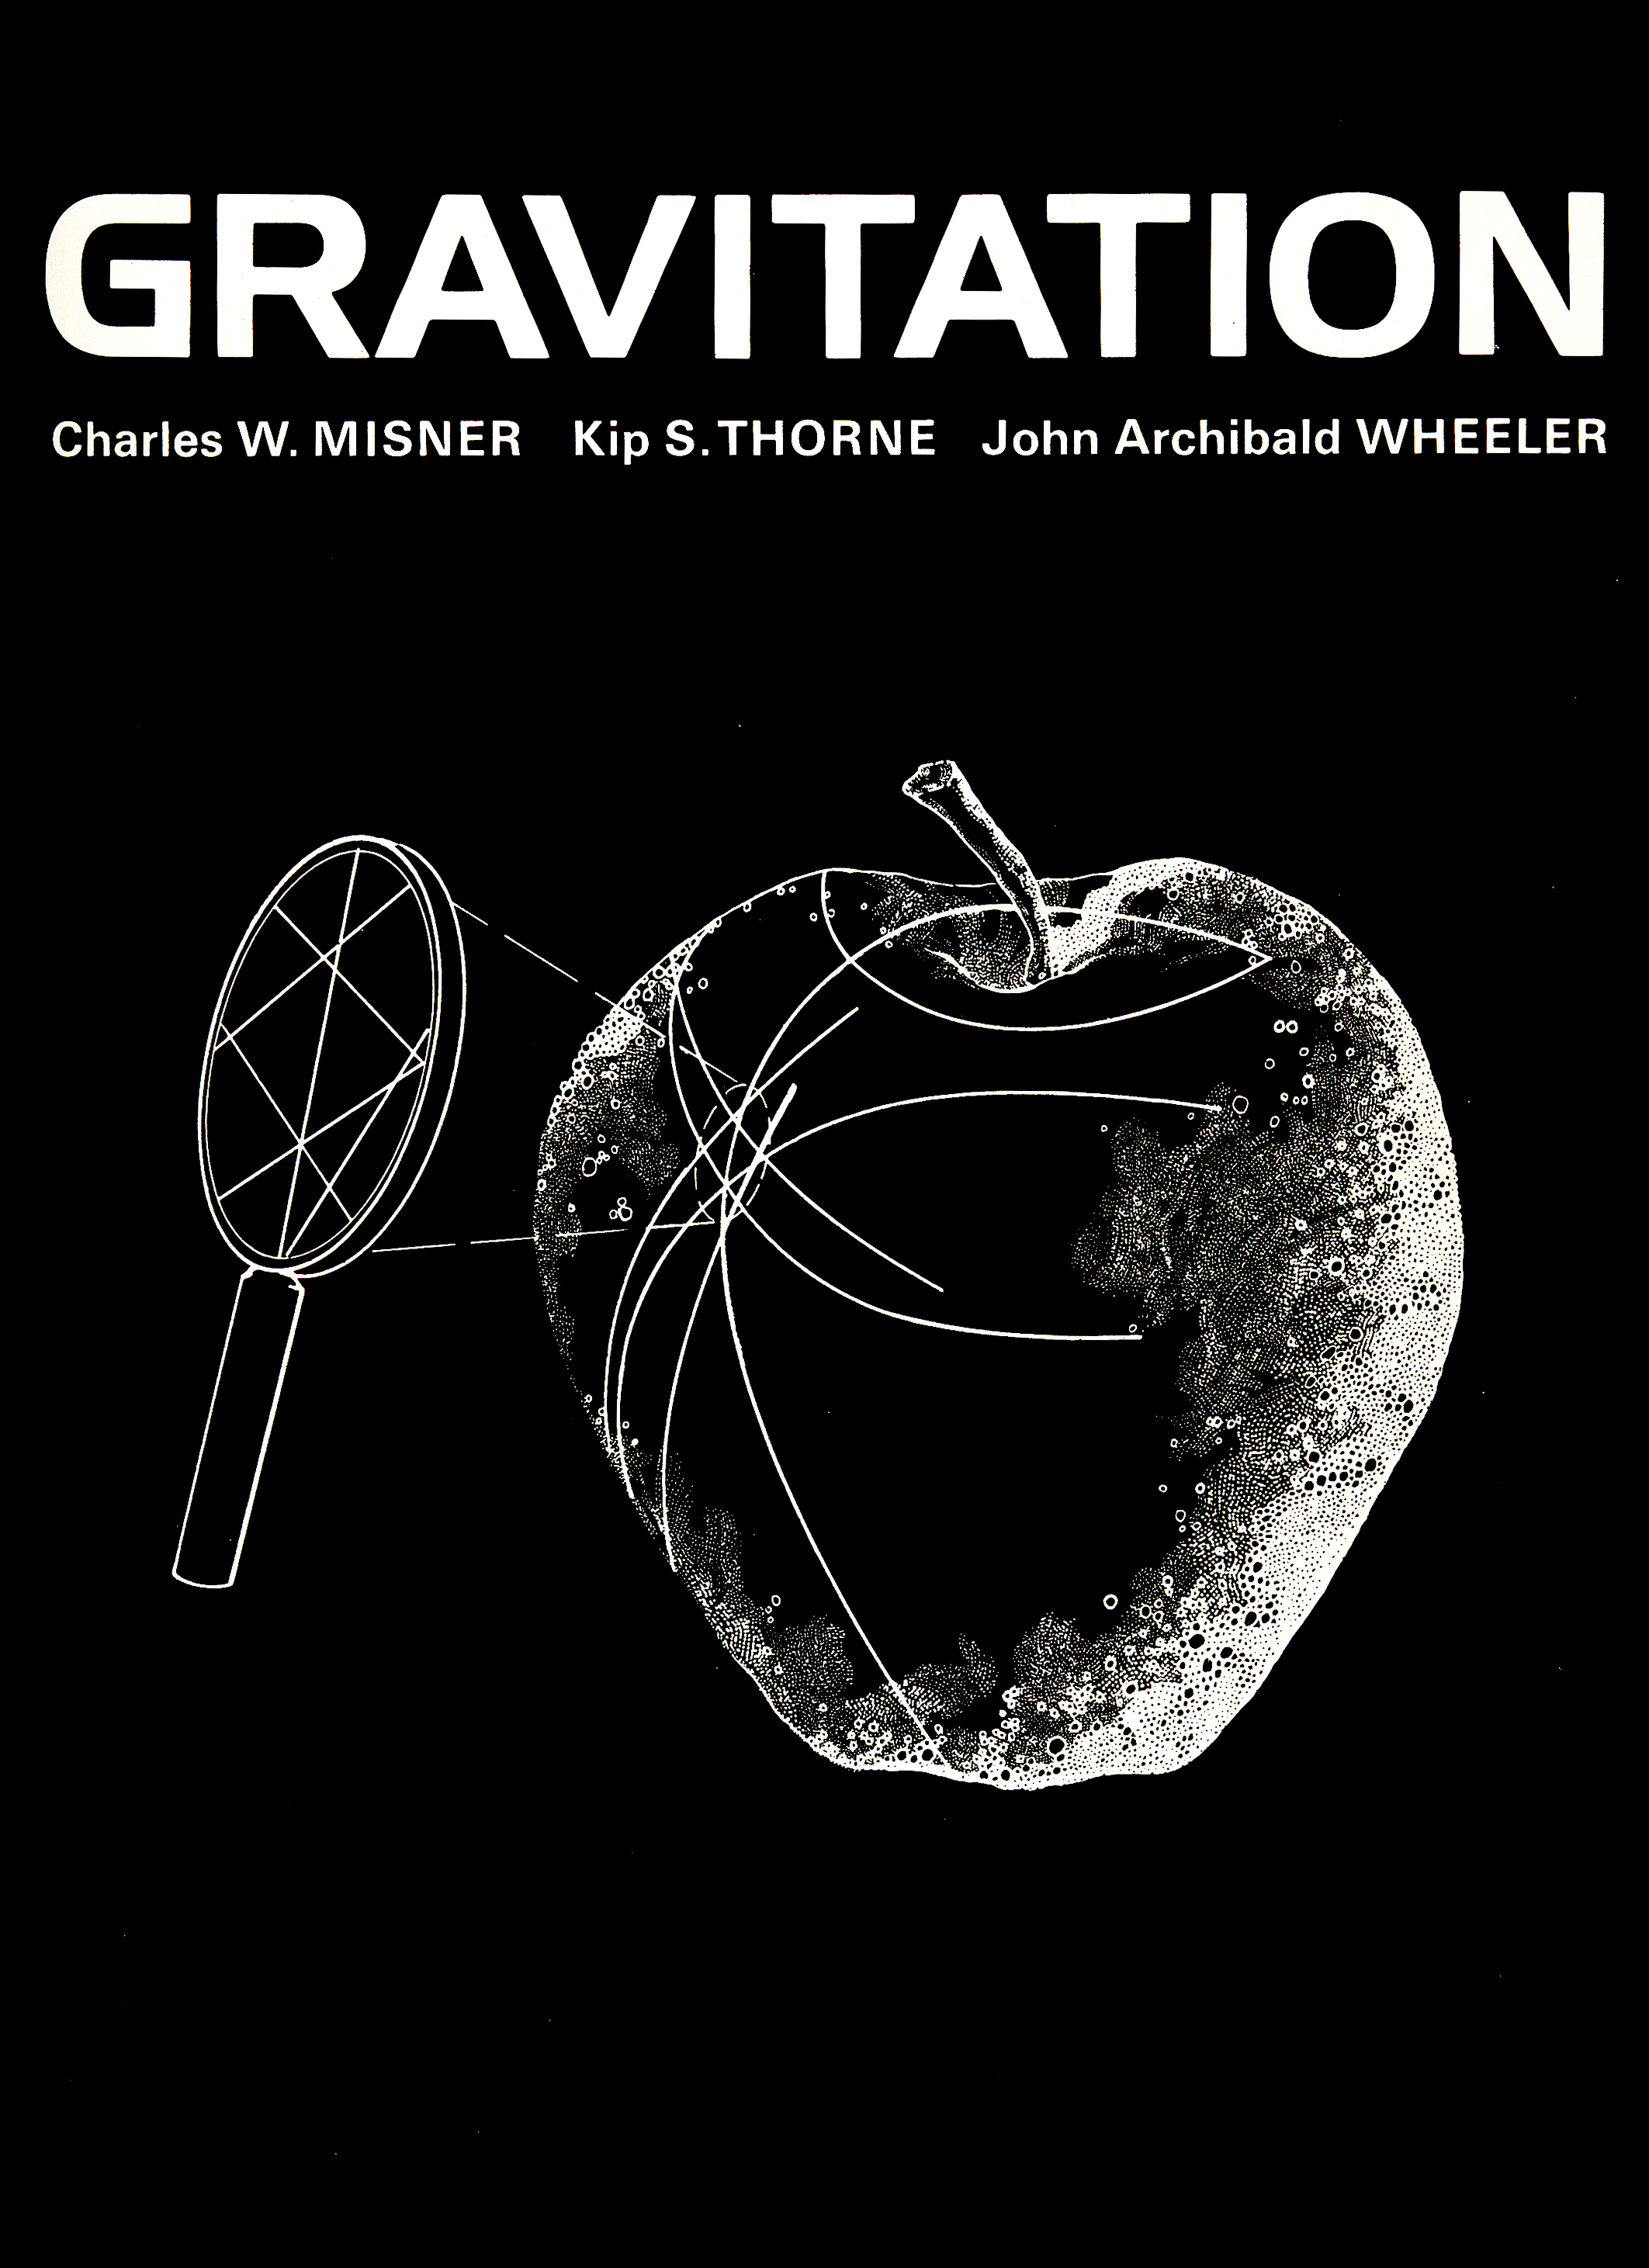 "Gravitation" by Charles W. Misner, Kip S. Thorne, and John Archibald Wheeler. San Francisco: W.H. Freeman, 1973.